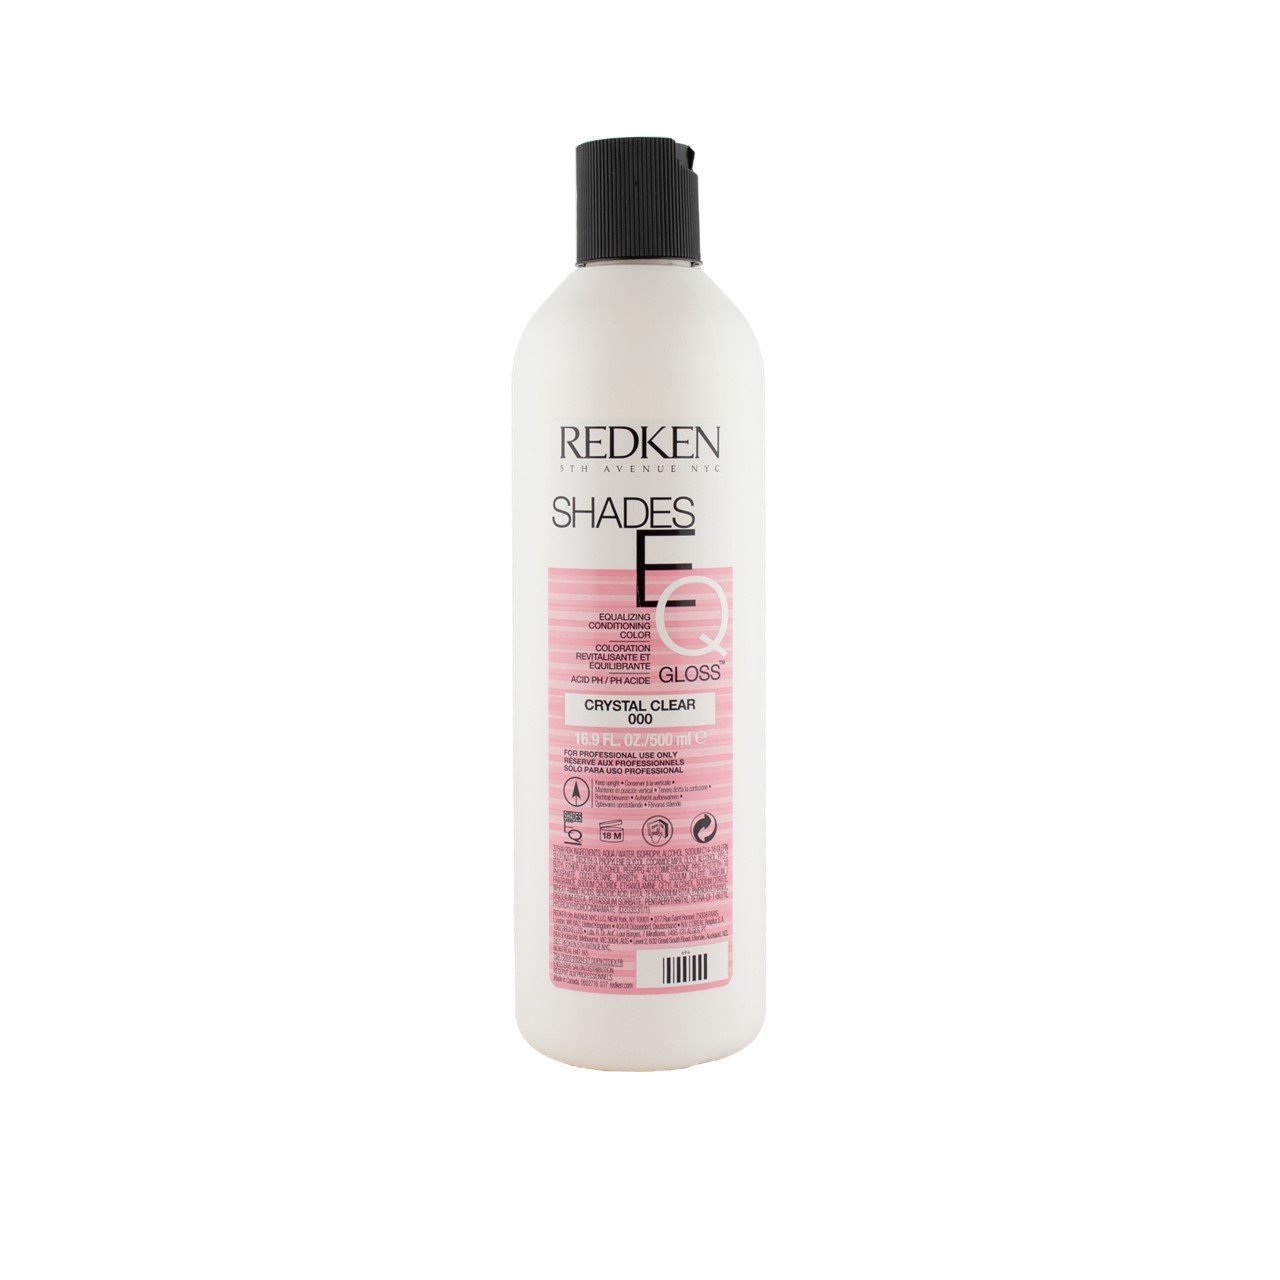 Redken Shades EQ Gloss 000 Crystal Clear Semi-Permanent Hair Dye 500ml (16.91fl oz)